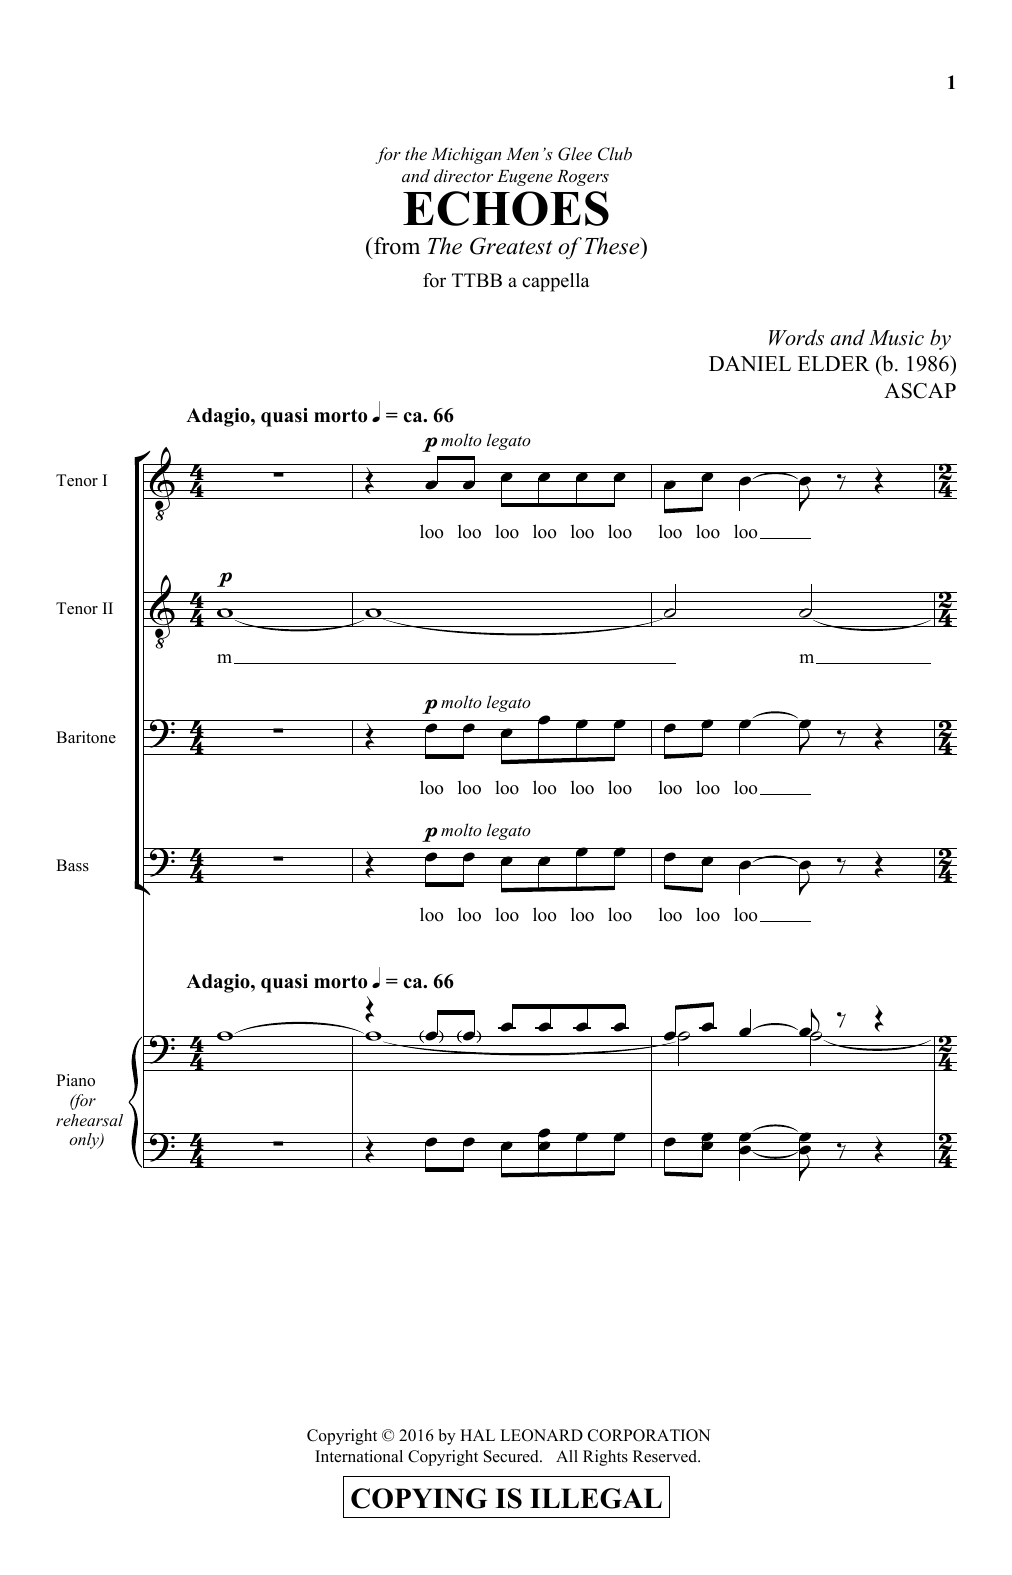 Daniel Elder Echoes sheet music notes and chords arranged for TTBB Choir